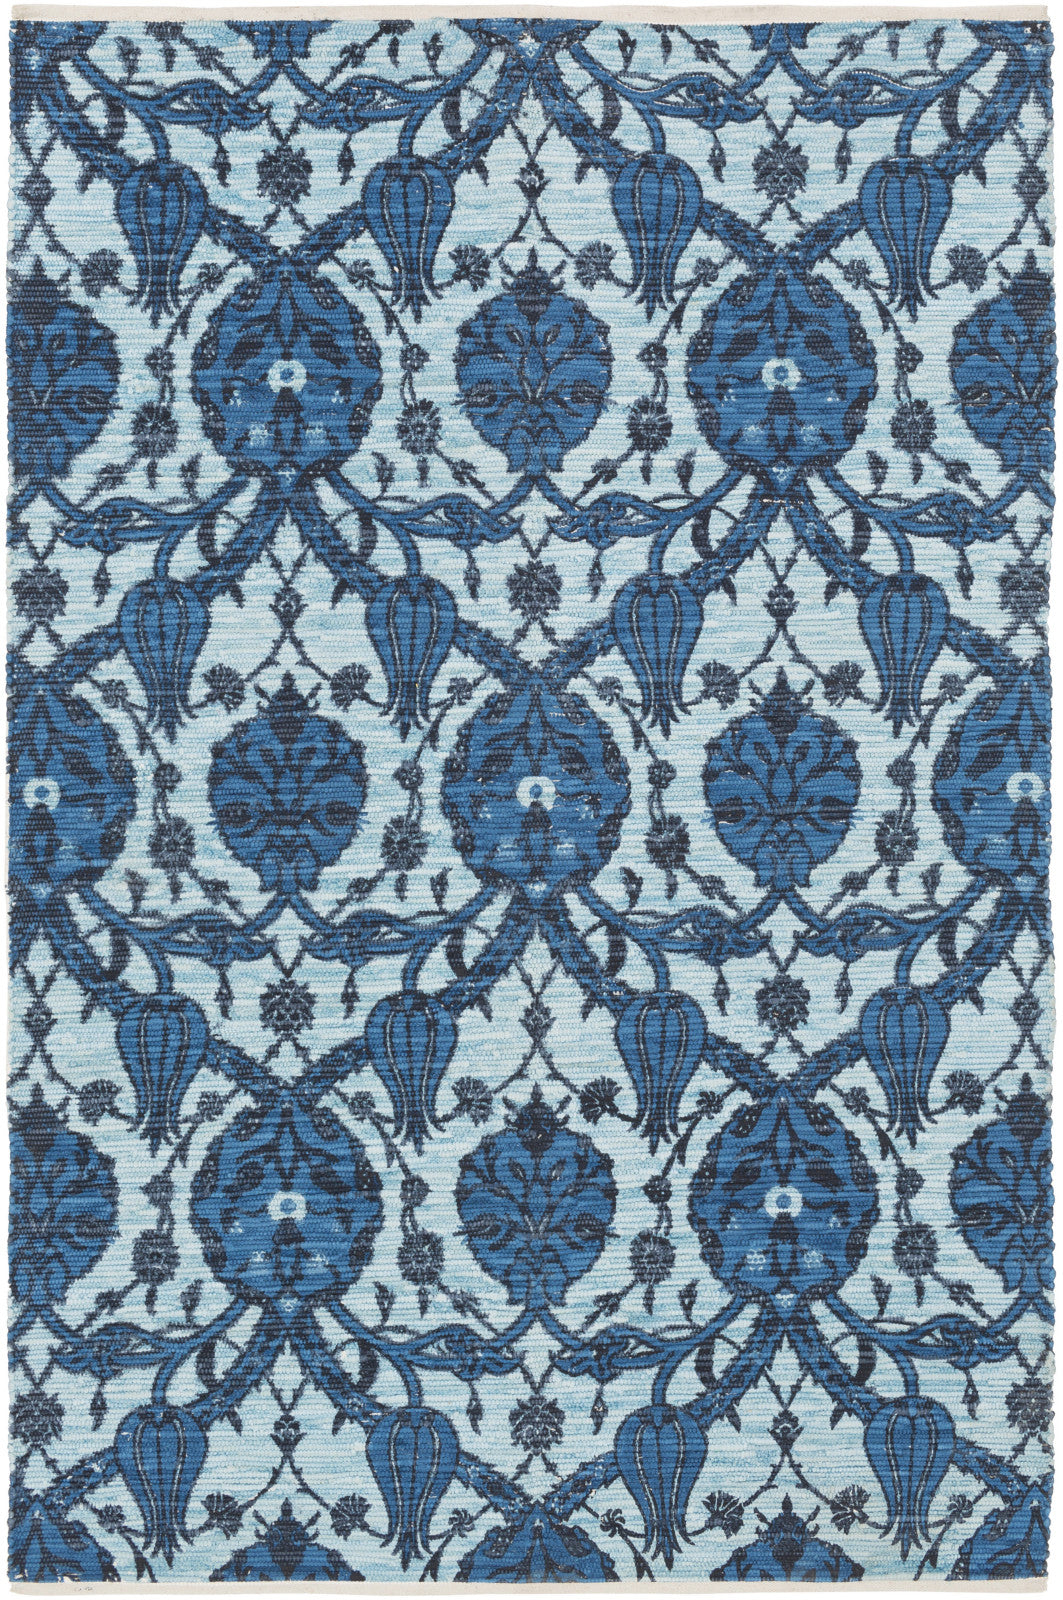 Artistic Weavers Elaine Landon Turquoise/Navy Blue Multi Area Rug main image